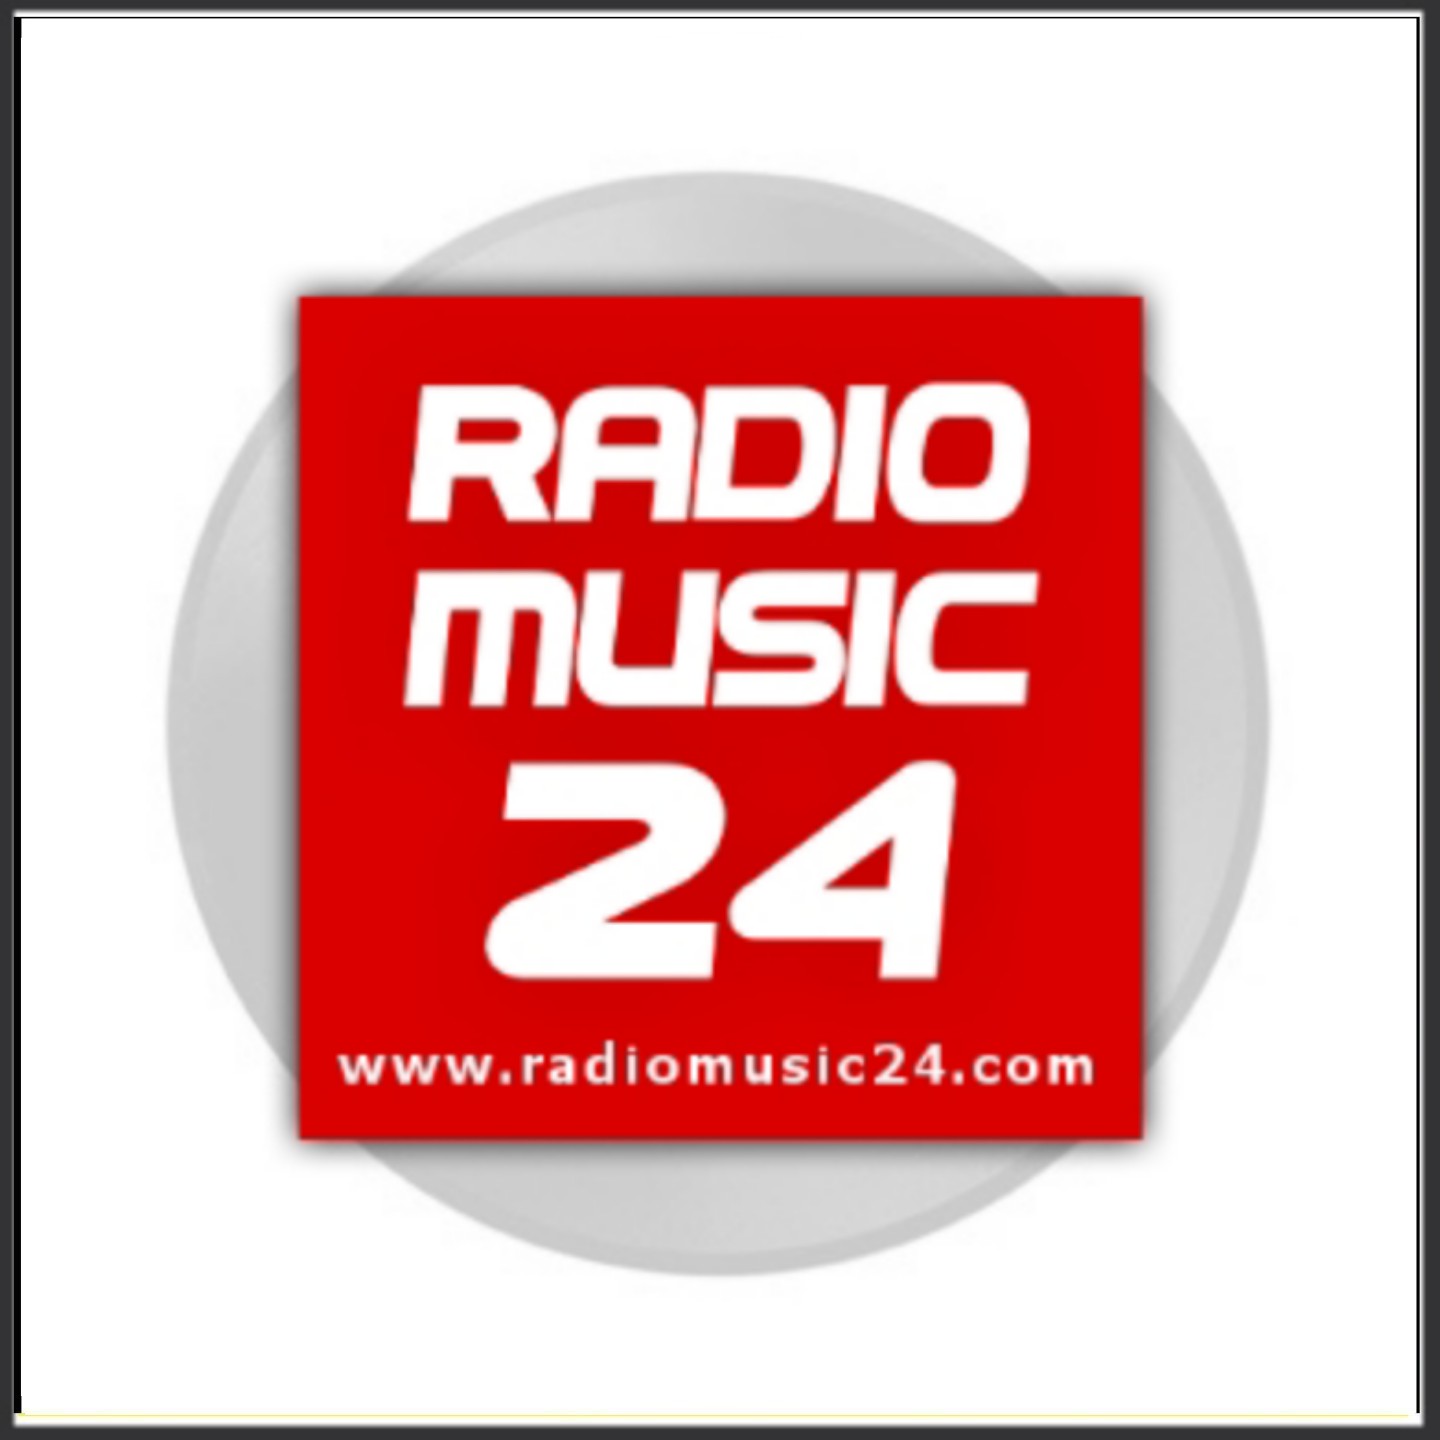 RADIO MUSIC 24